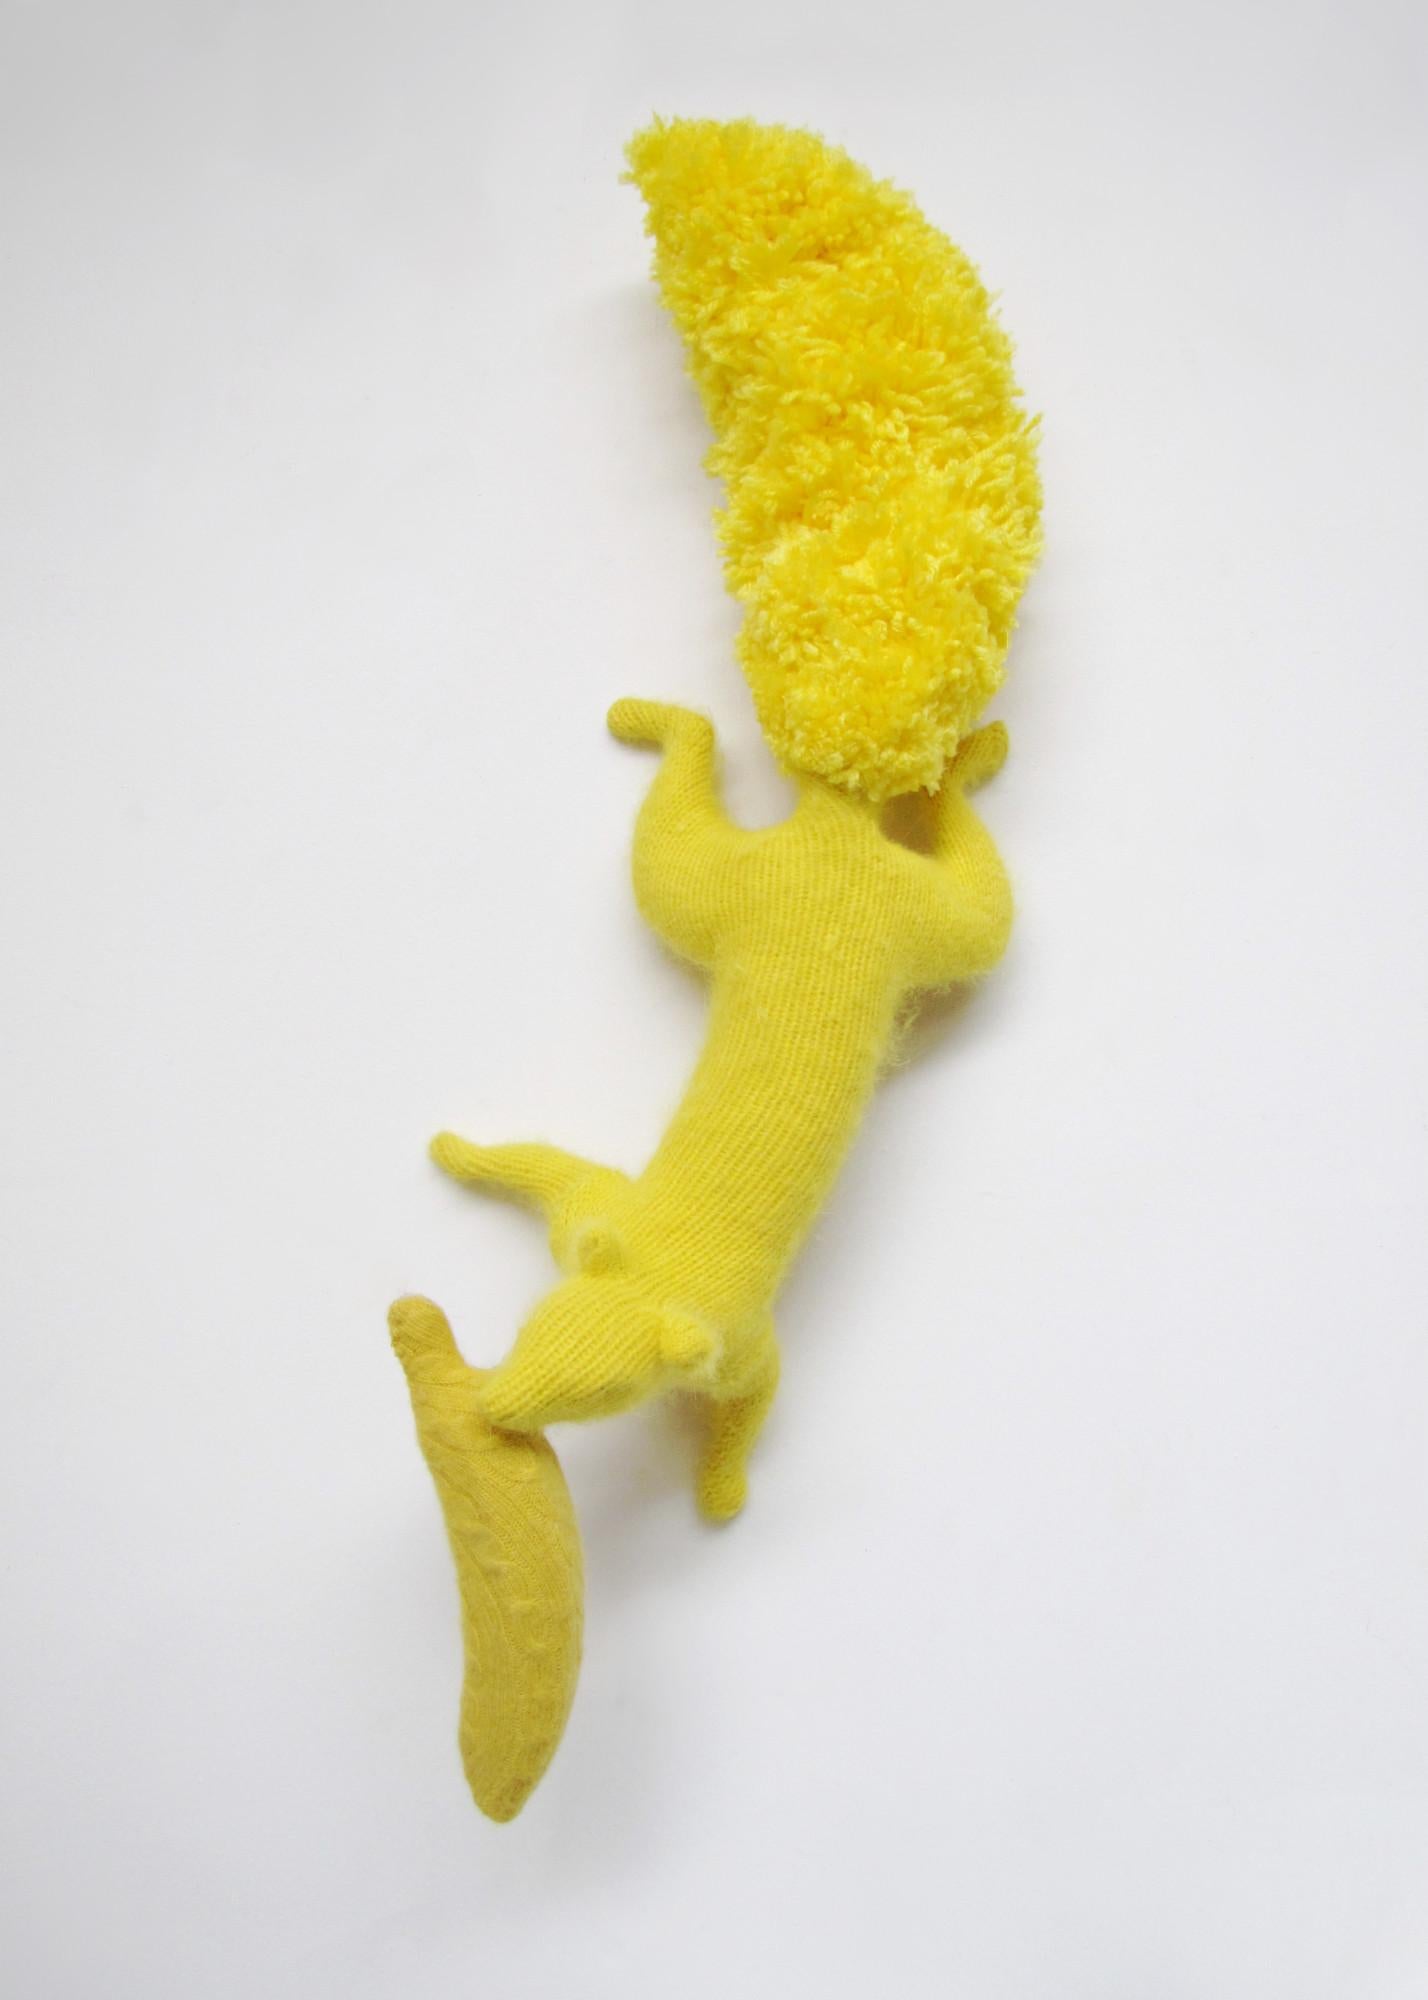 Banana Thief - Sculpture by Rachel Denny